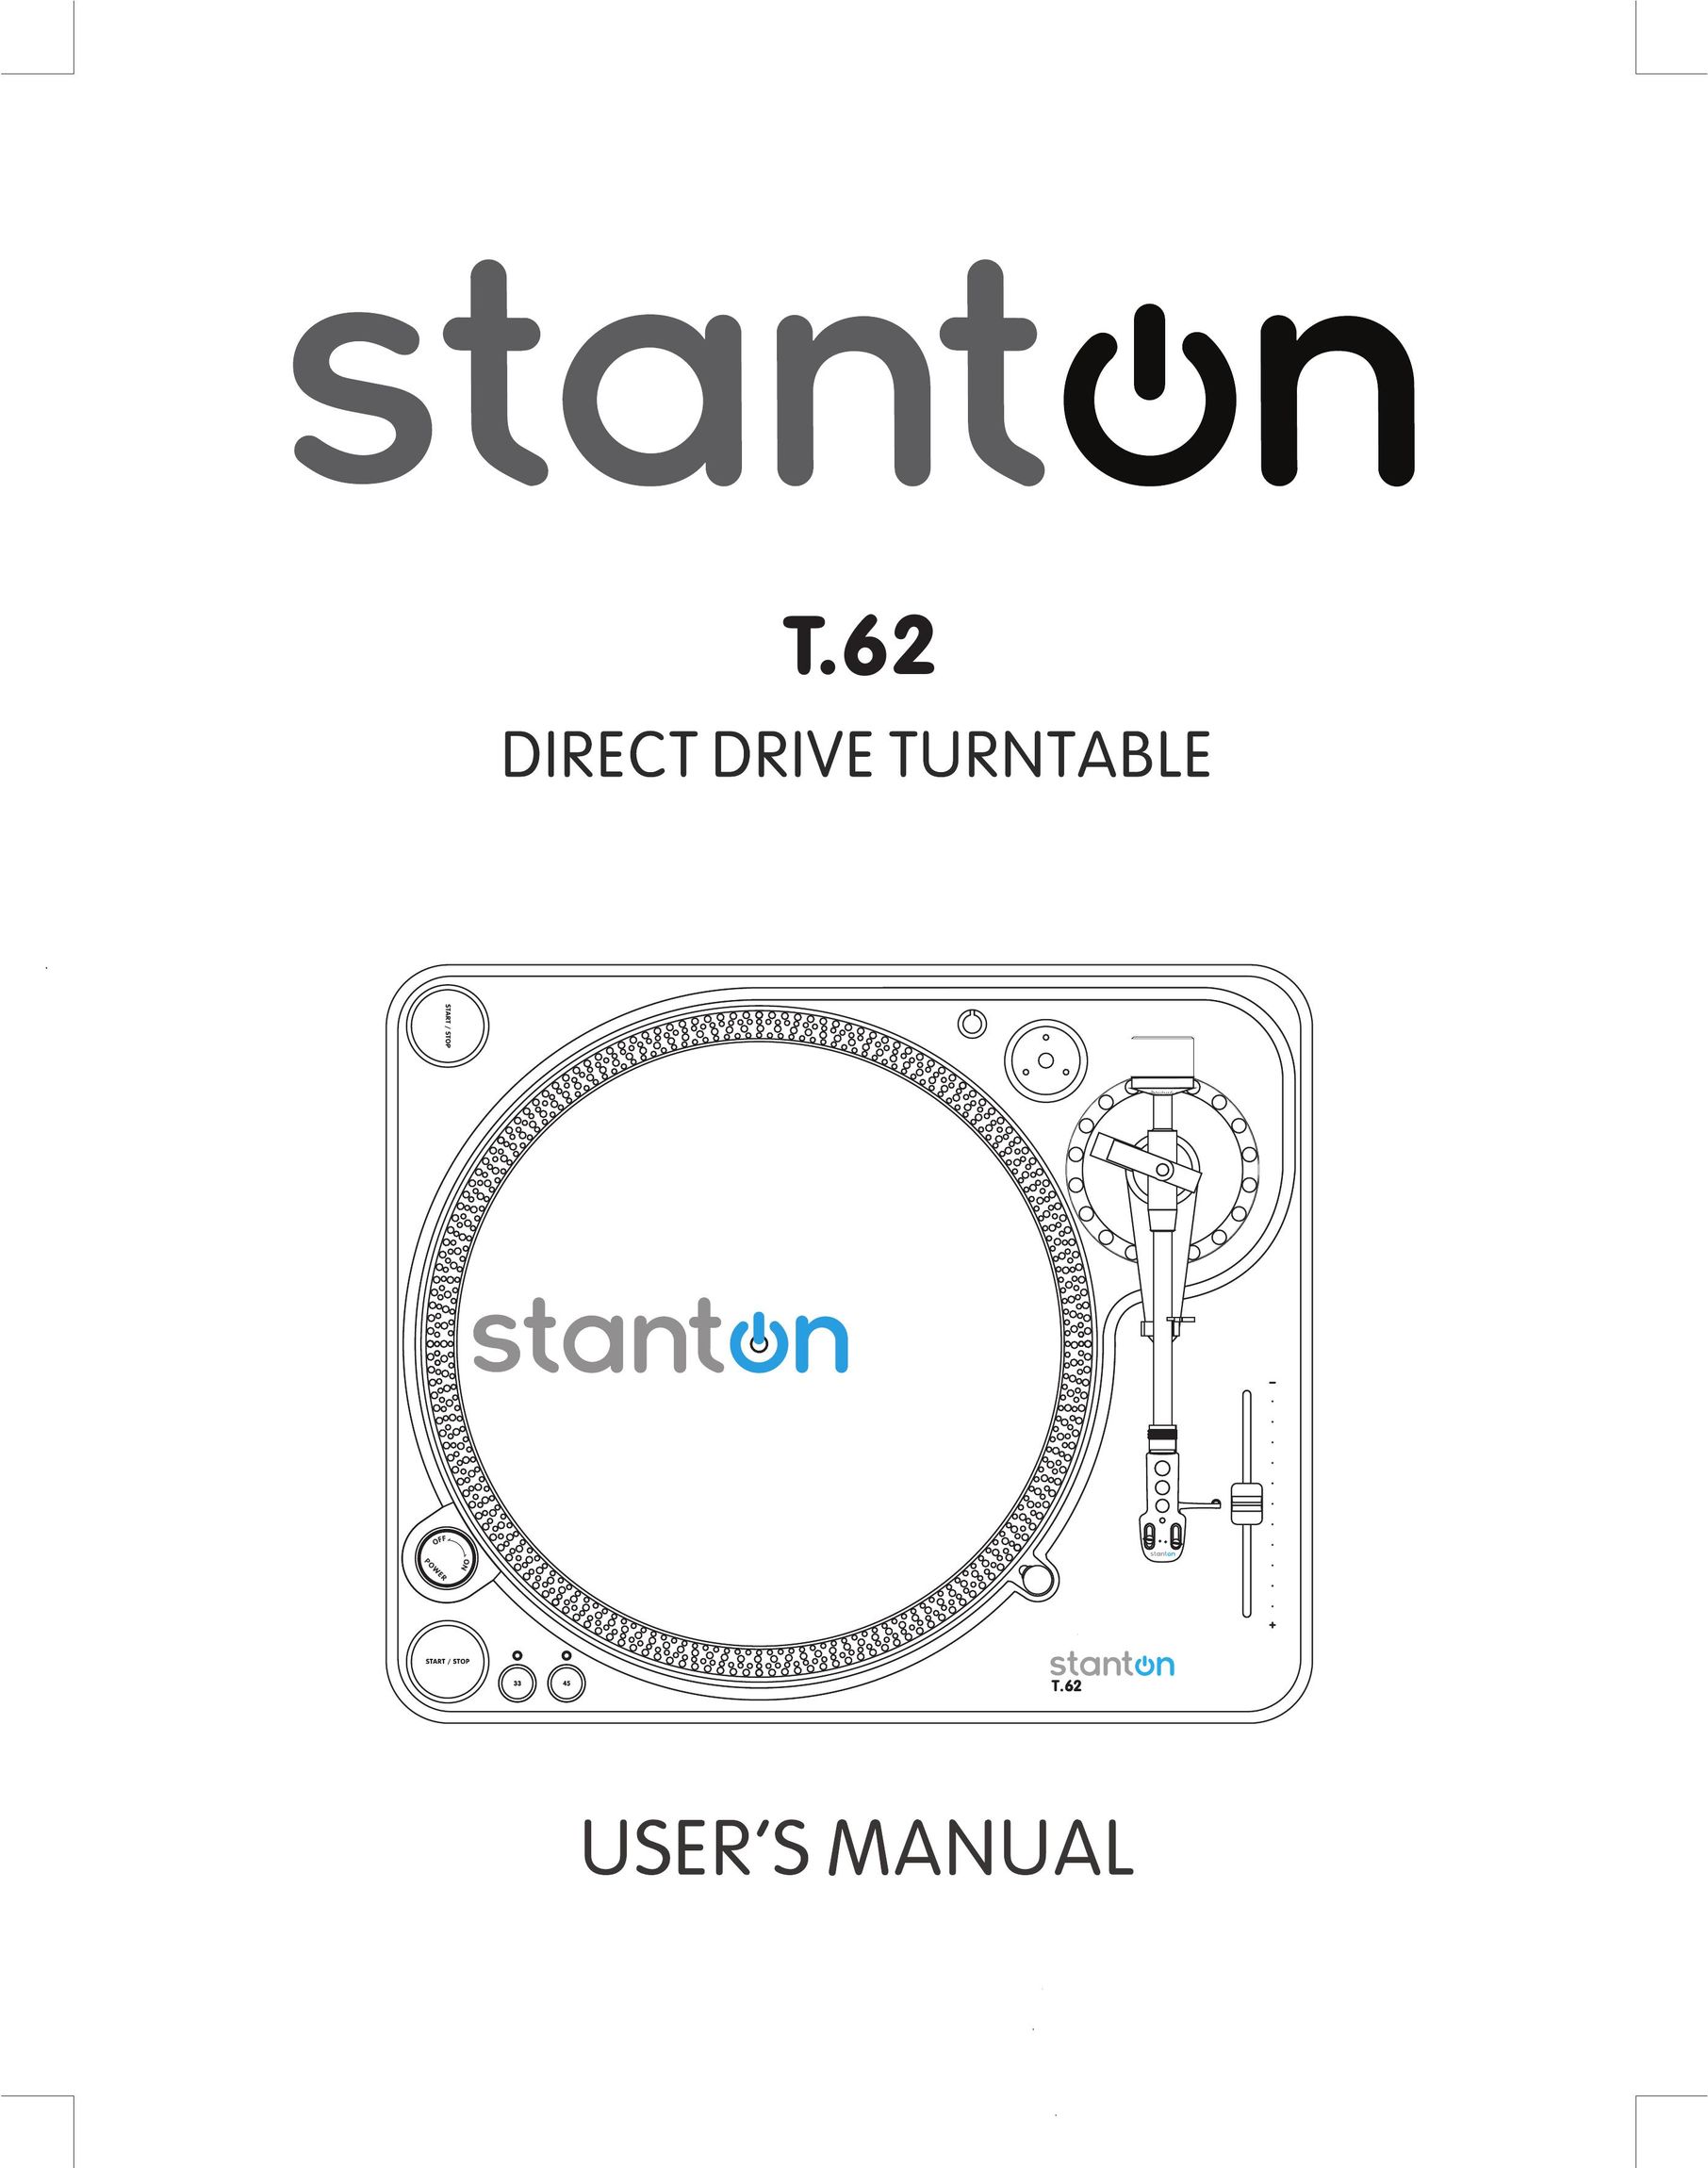 Stanton T.62 Turntable User Manual